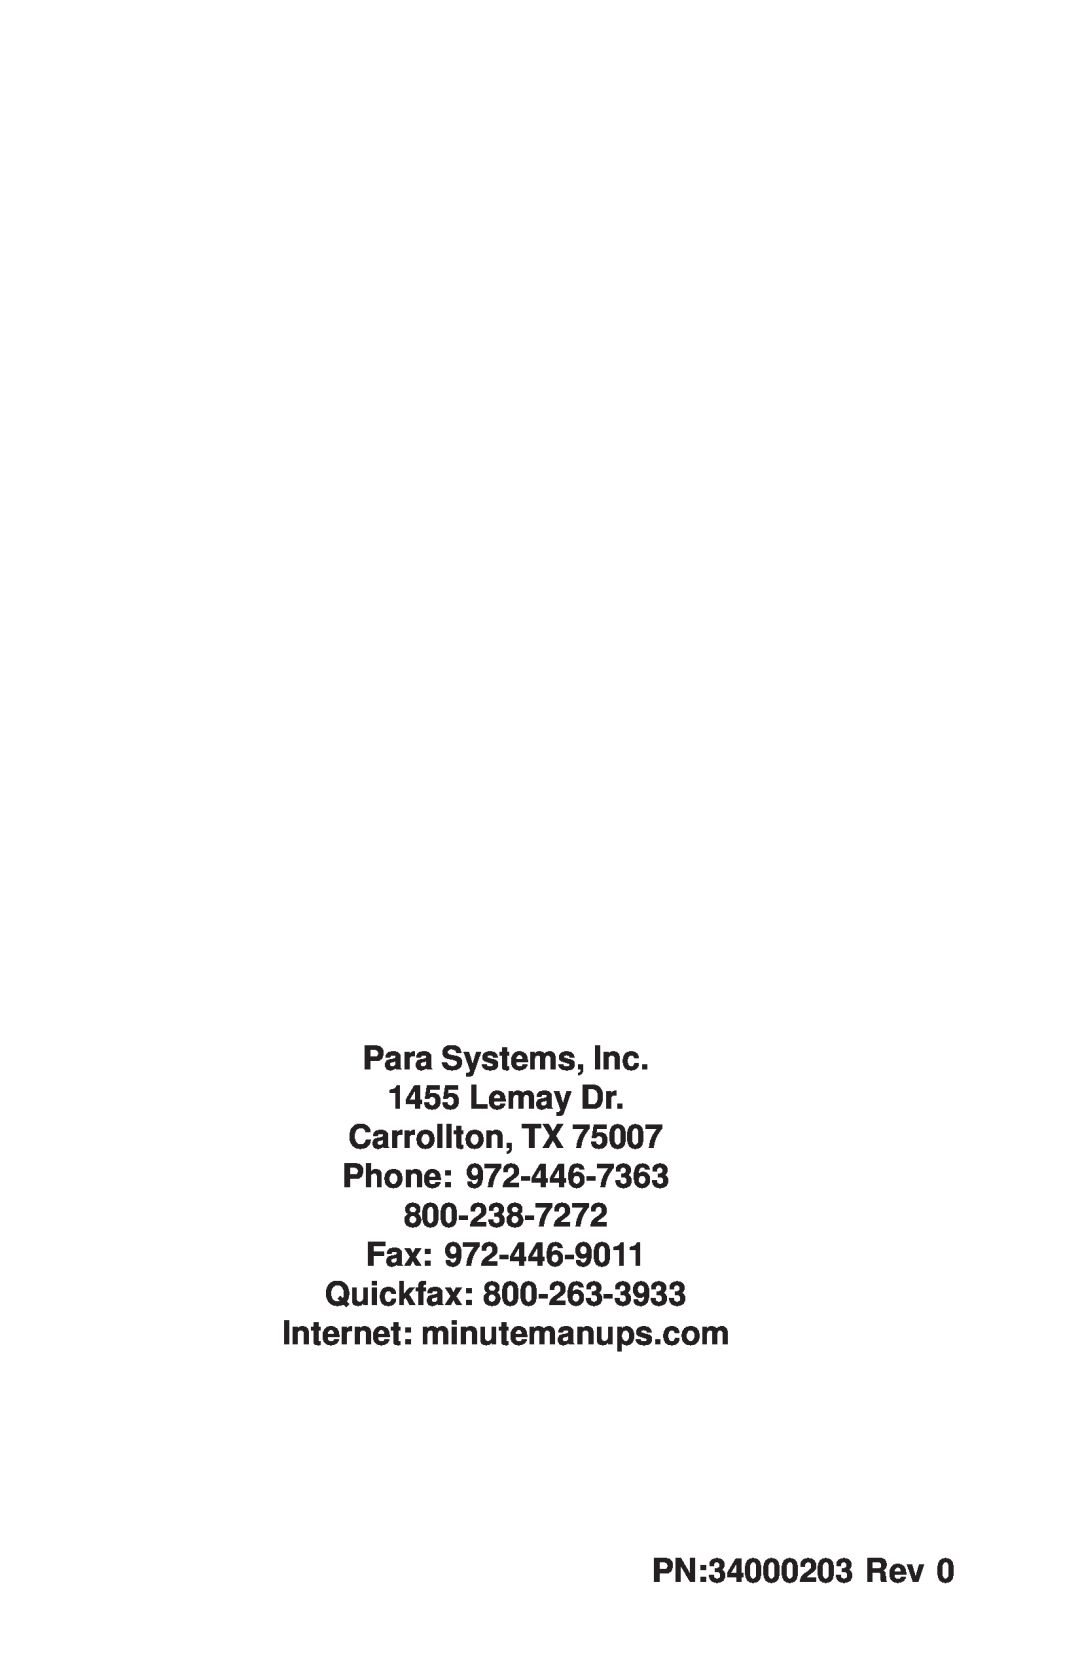 Minuteman UPS MCP-E Para Systems, Inc 1455 Lemay Dr Carrollton, TX Phone, Fax Quickfax Internet minutemanups.com 